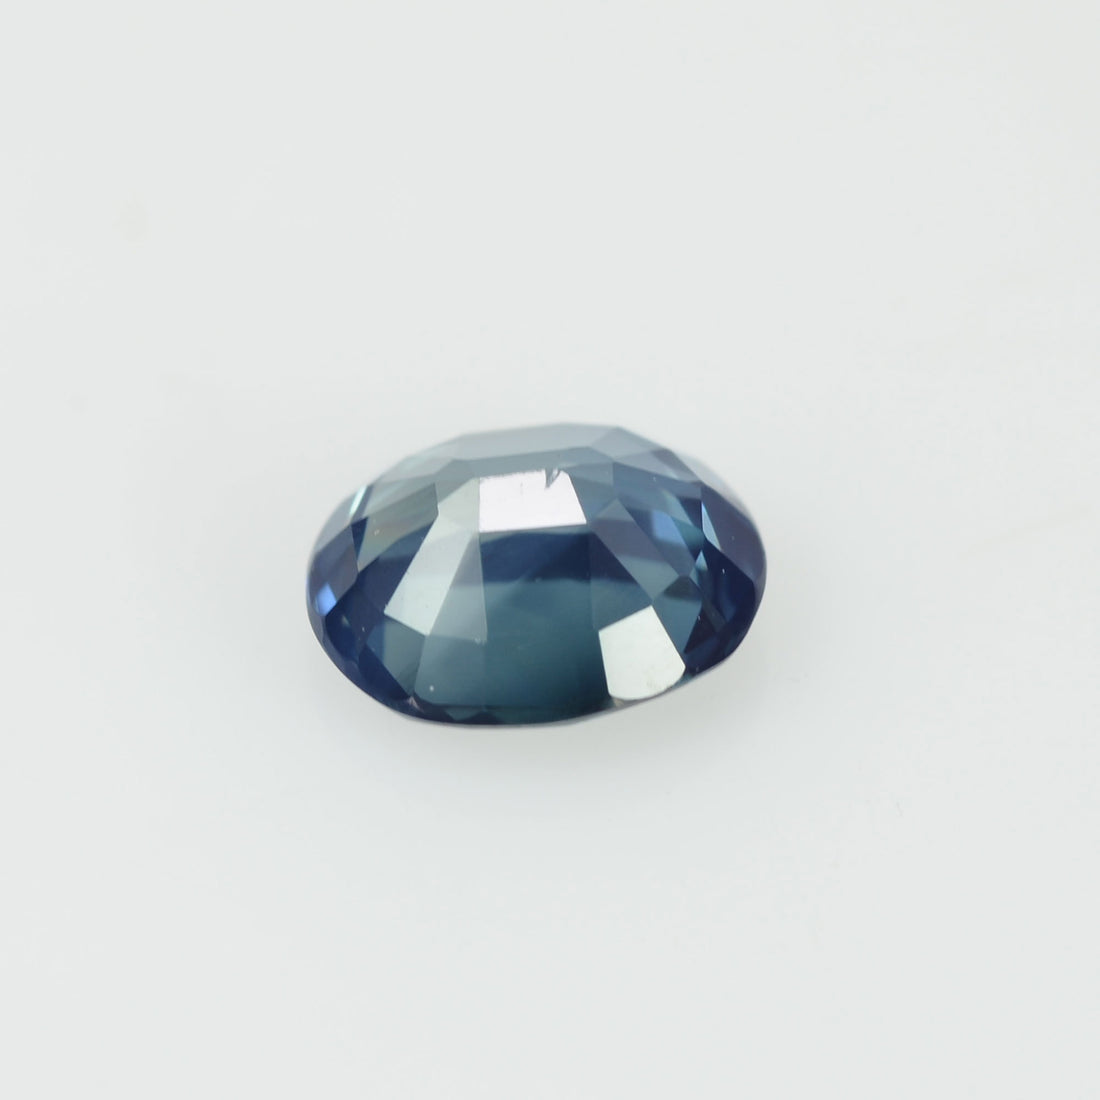 0.62 cts Natural Teal Blue Green Sapphire Loose Gemstone Oval Cut - Thai Gems Export Ltd.